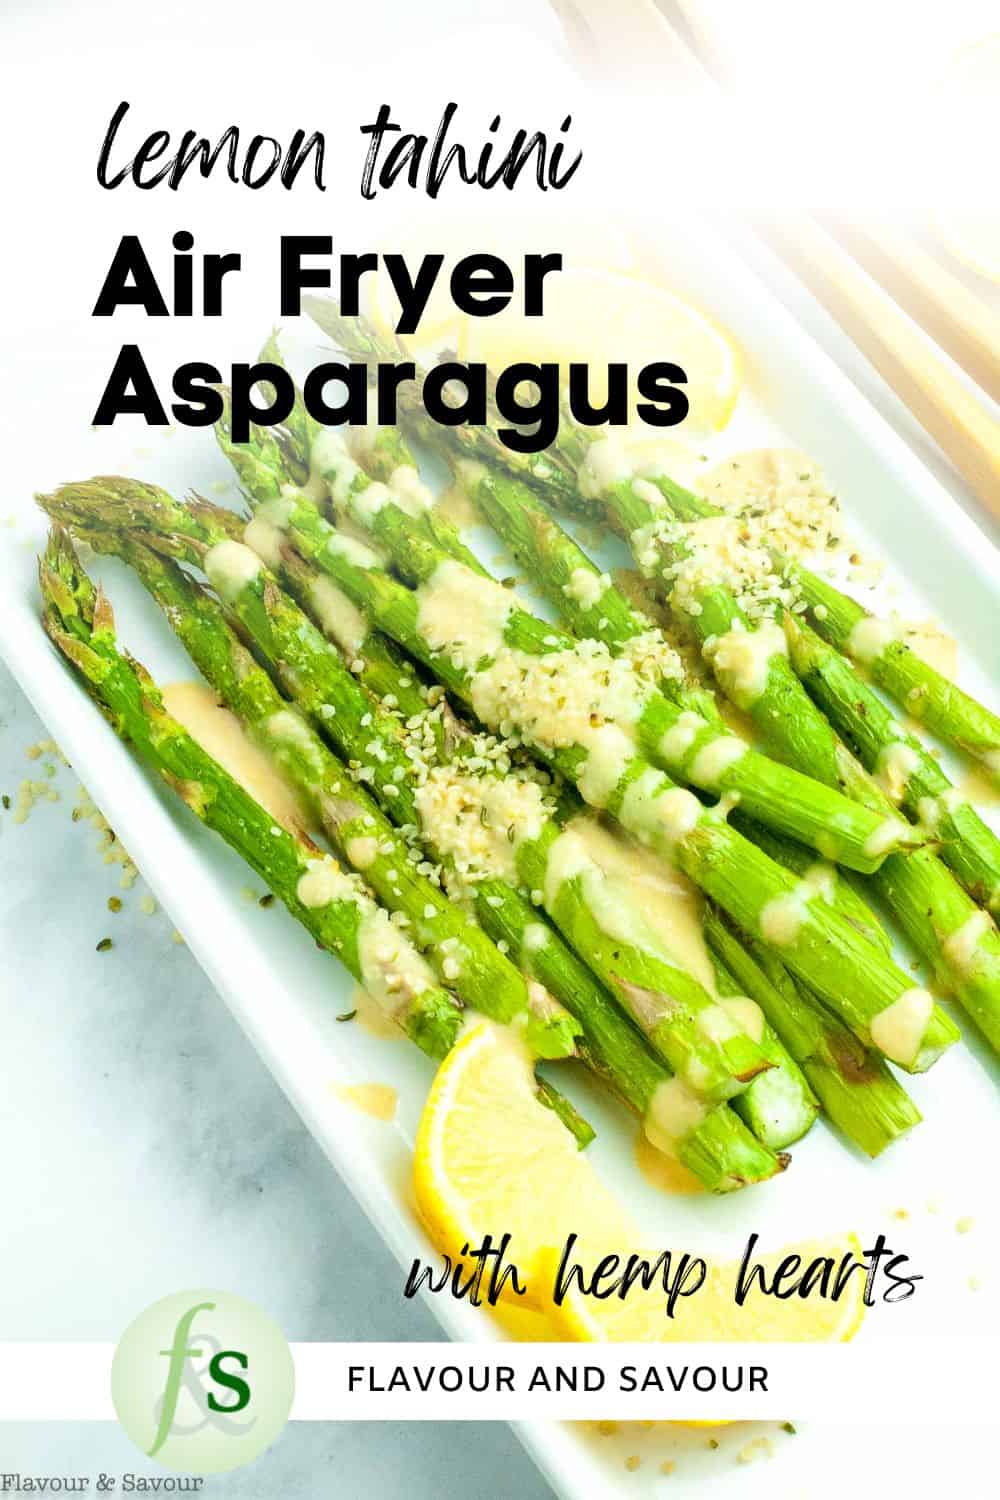 Image with text overlay for Lemon Tahini Air Fryer Asparagus with hemp hearts.